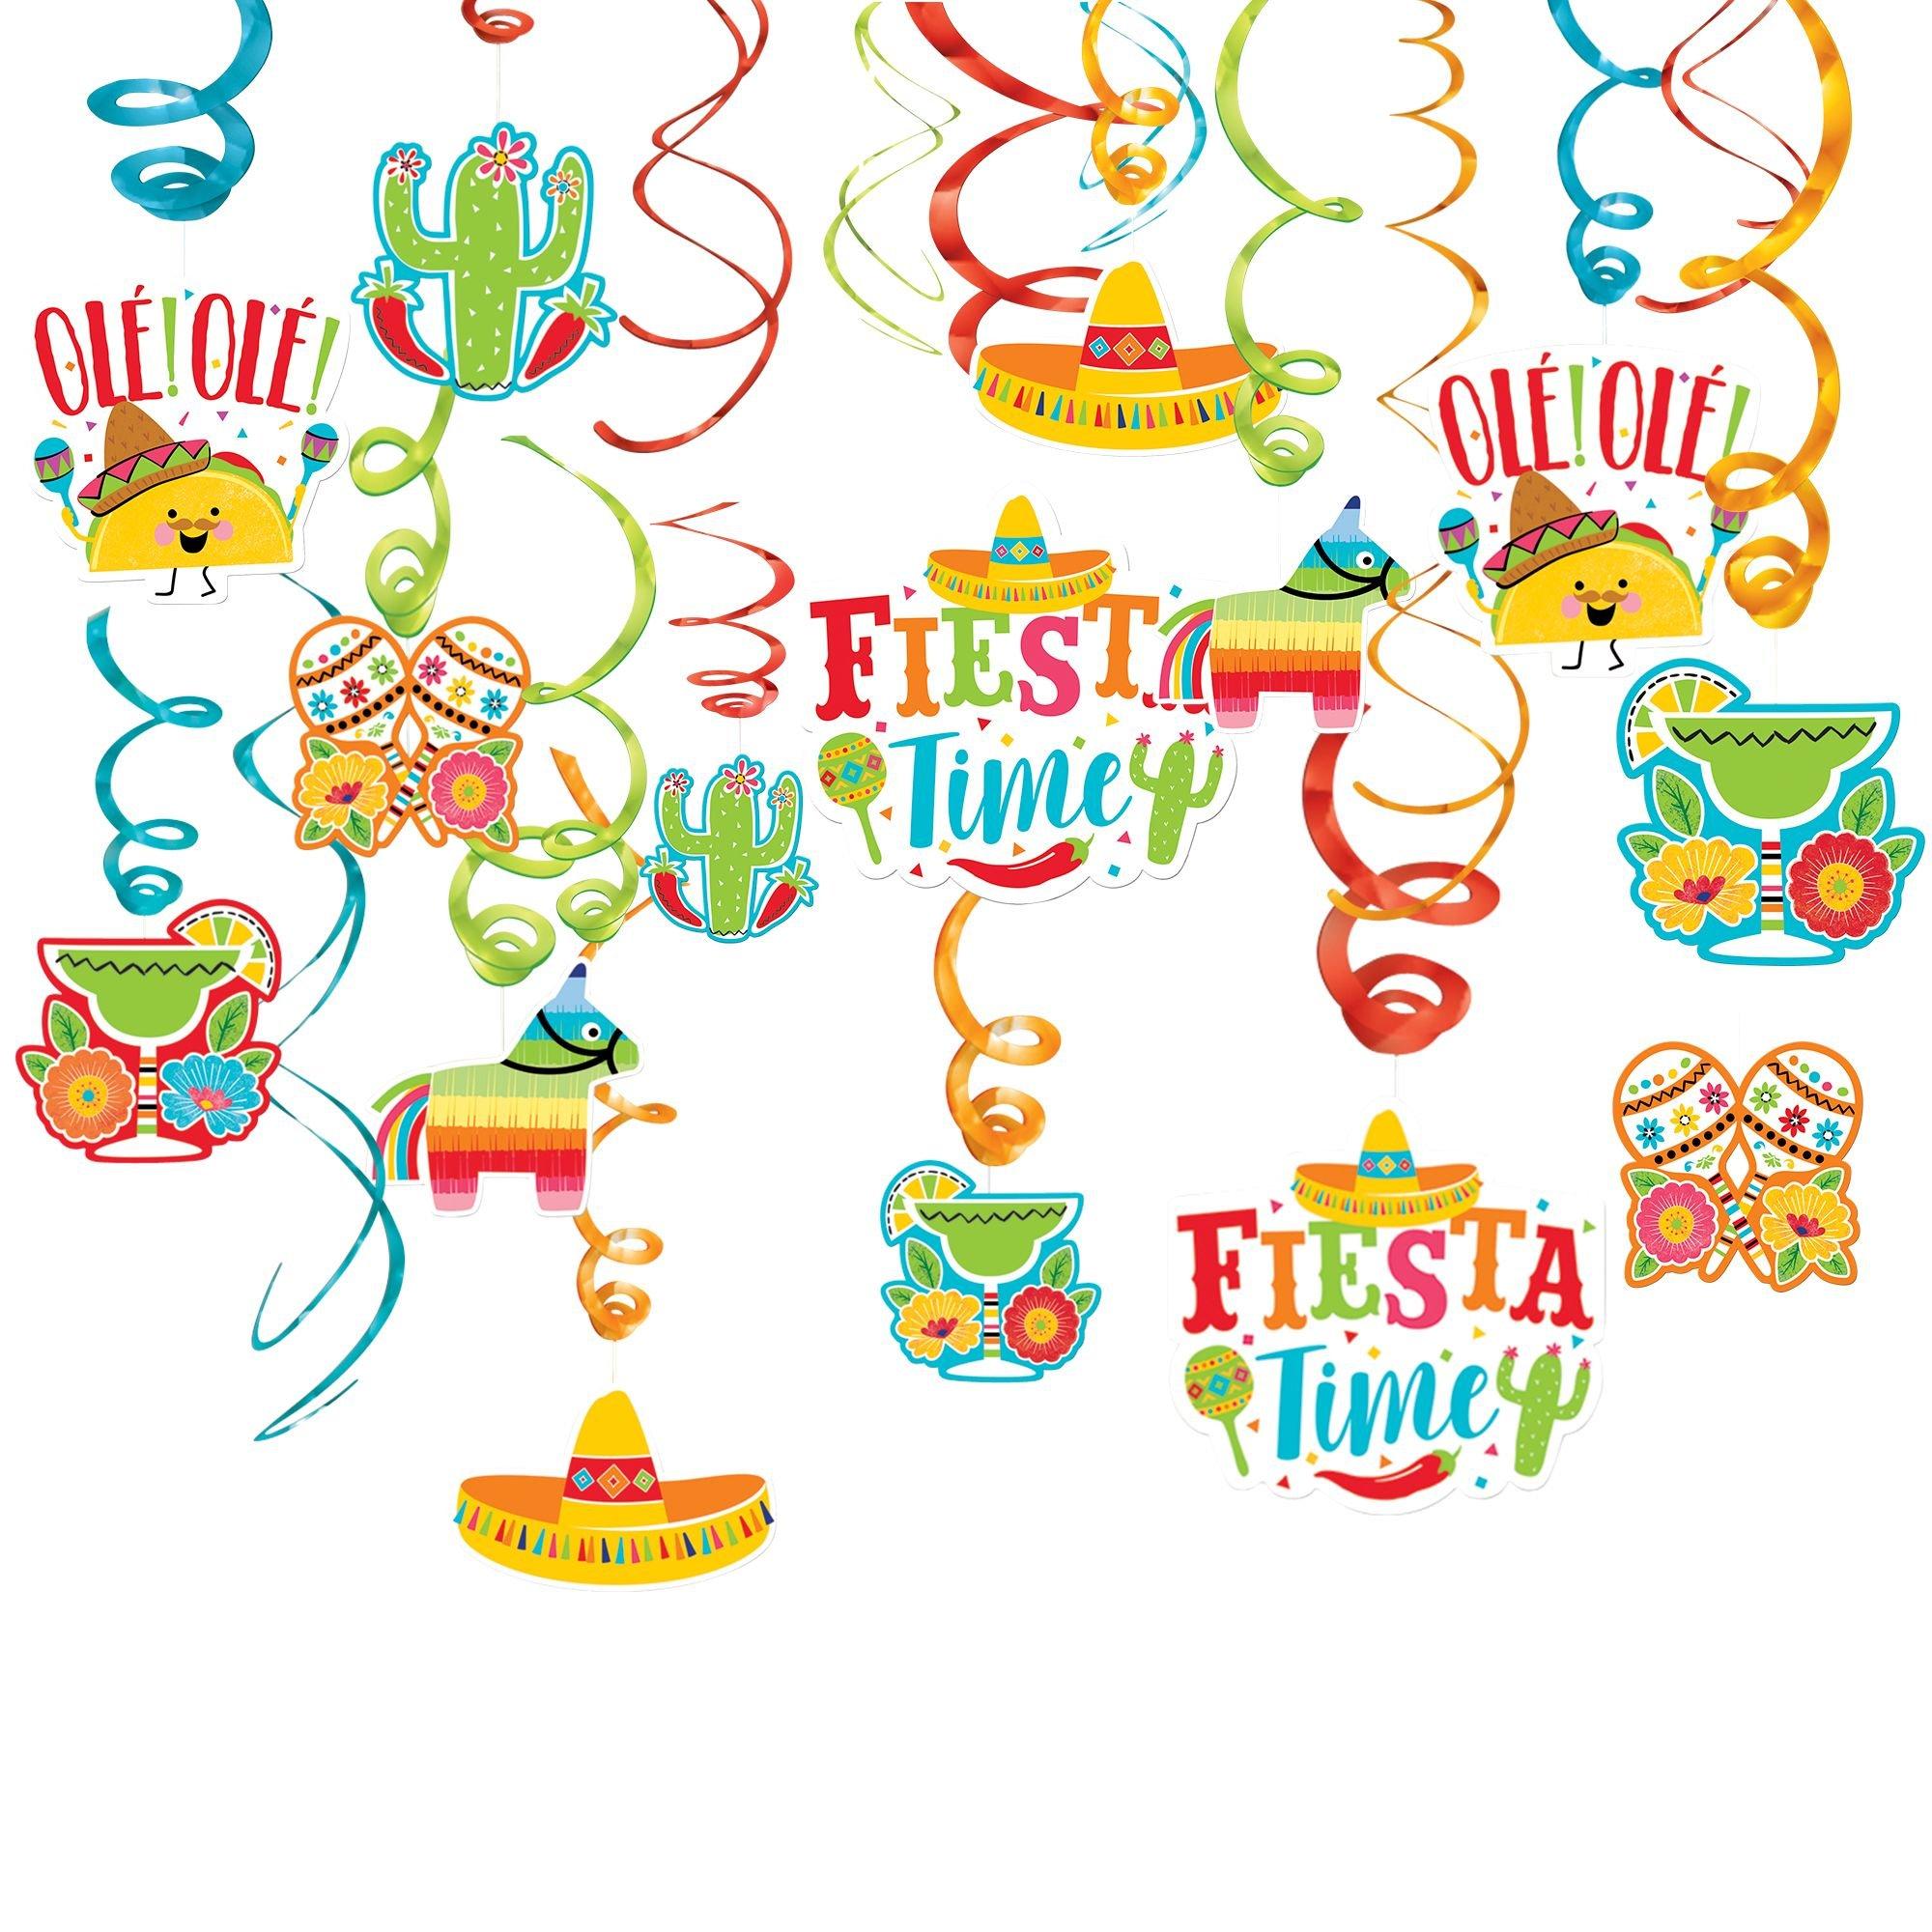 98+ pcs|Mexican Themed Fiesta Party Supplies Set|fiesta mexico|mexican Themed party|fiesta Party decorations|5 de Mayo Celebracion